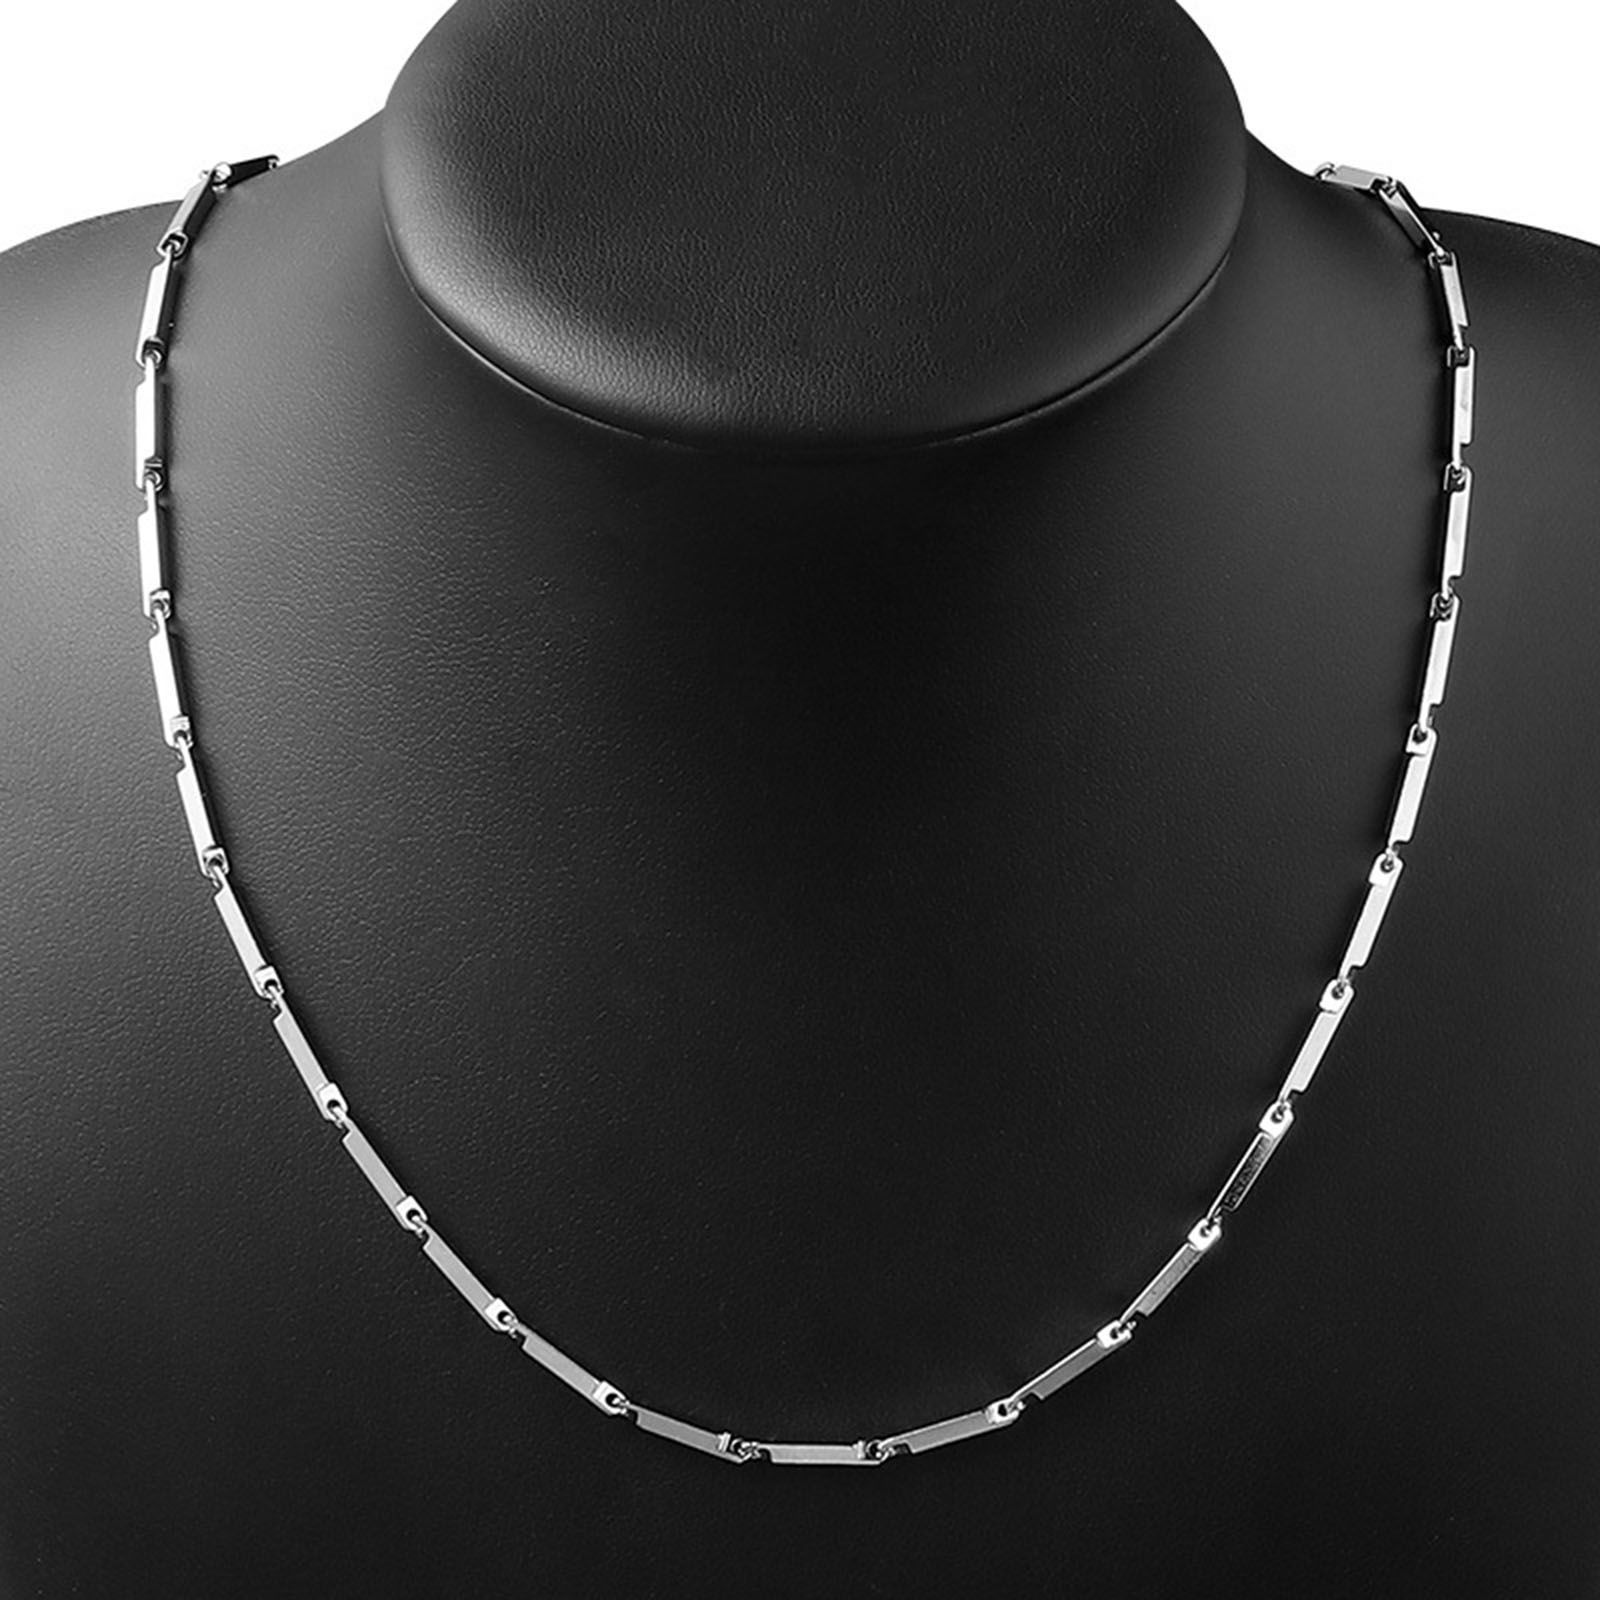 Bild von 304 Edelstahl Halskette Silberfarbe 45cm lang, 1 Strang